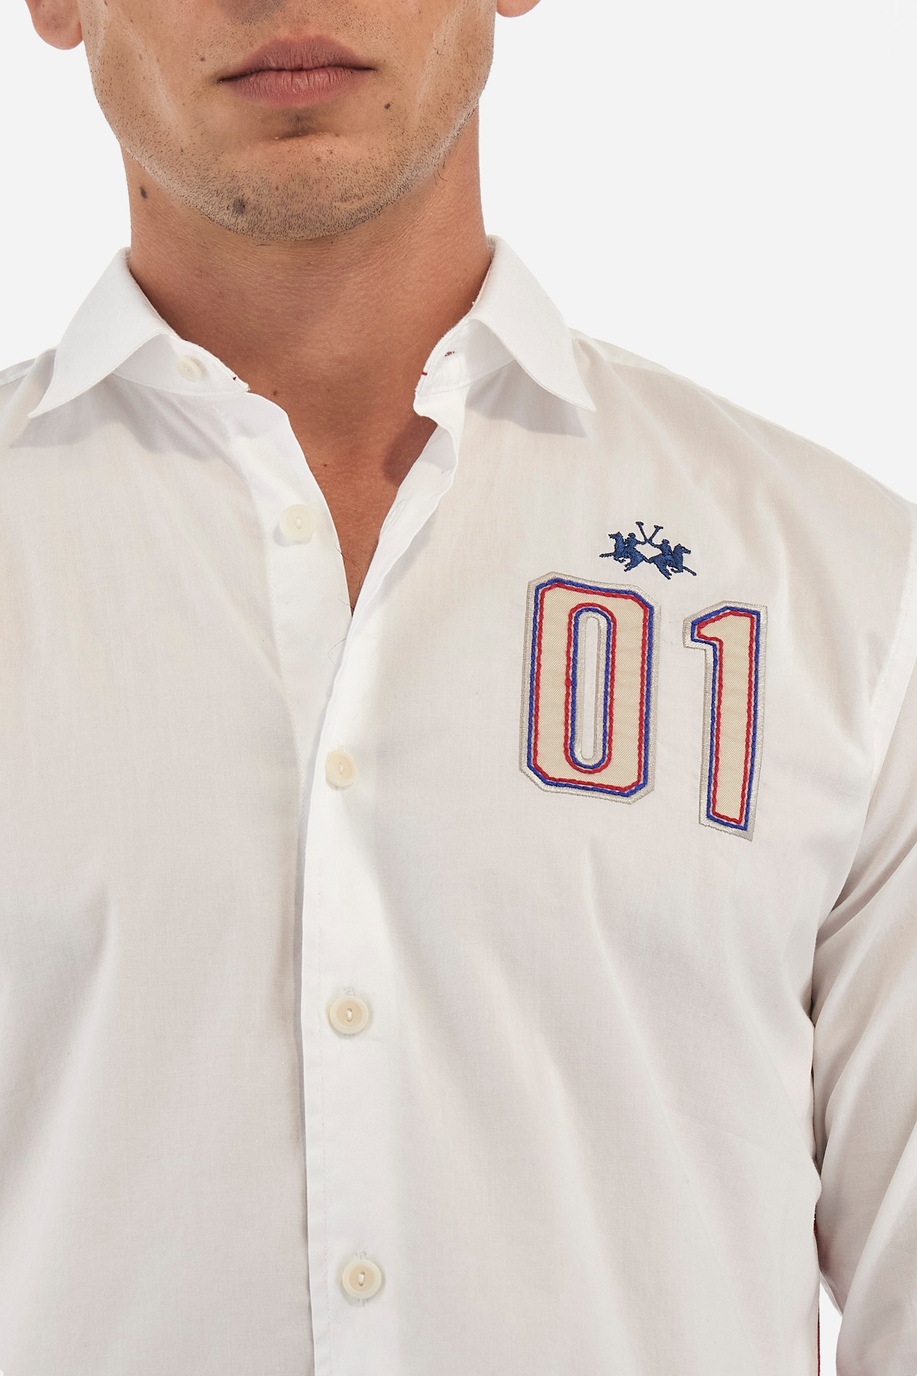 Men's shirt in a regular fit - Whitman - New Arrivals | La Martina - Official Online Shop